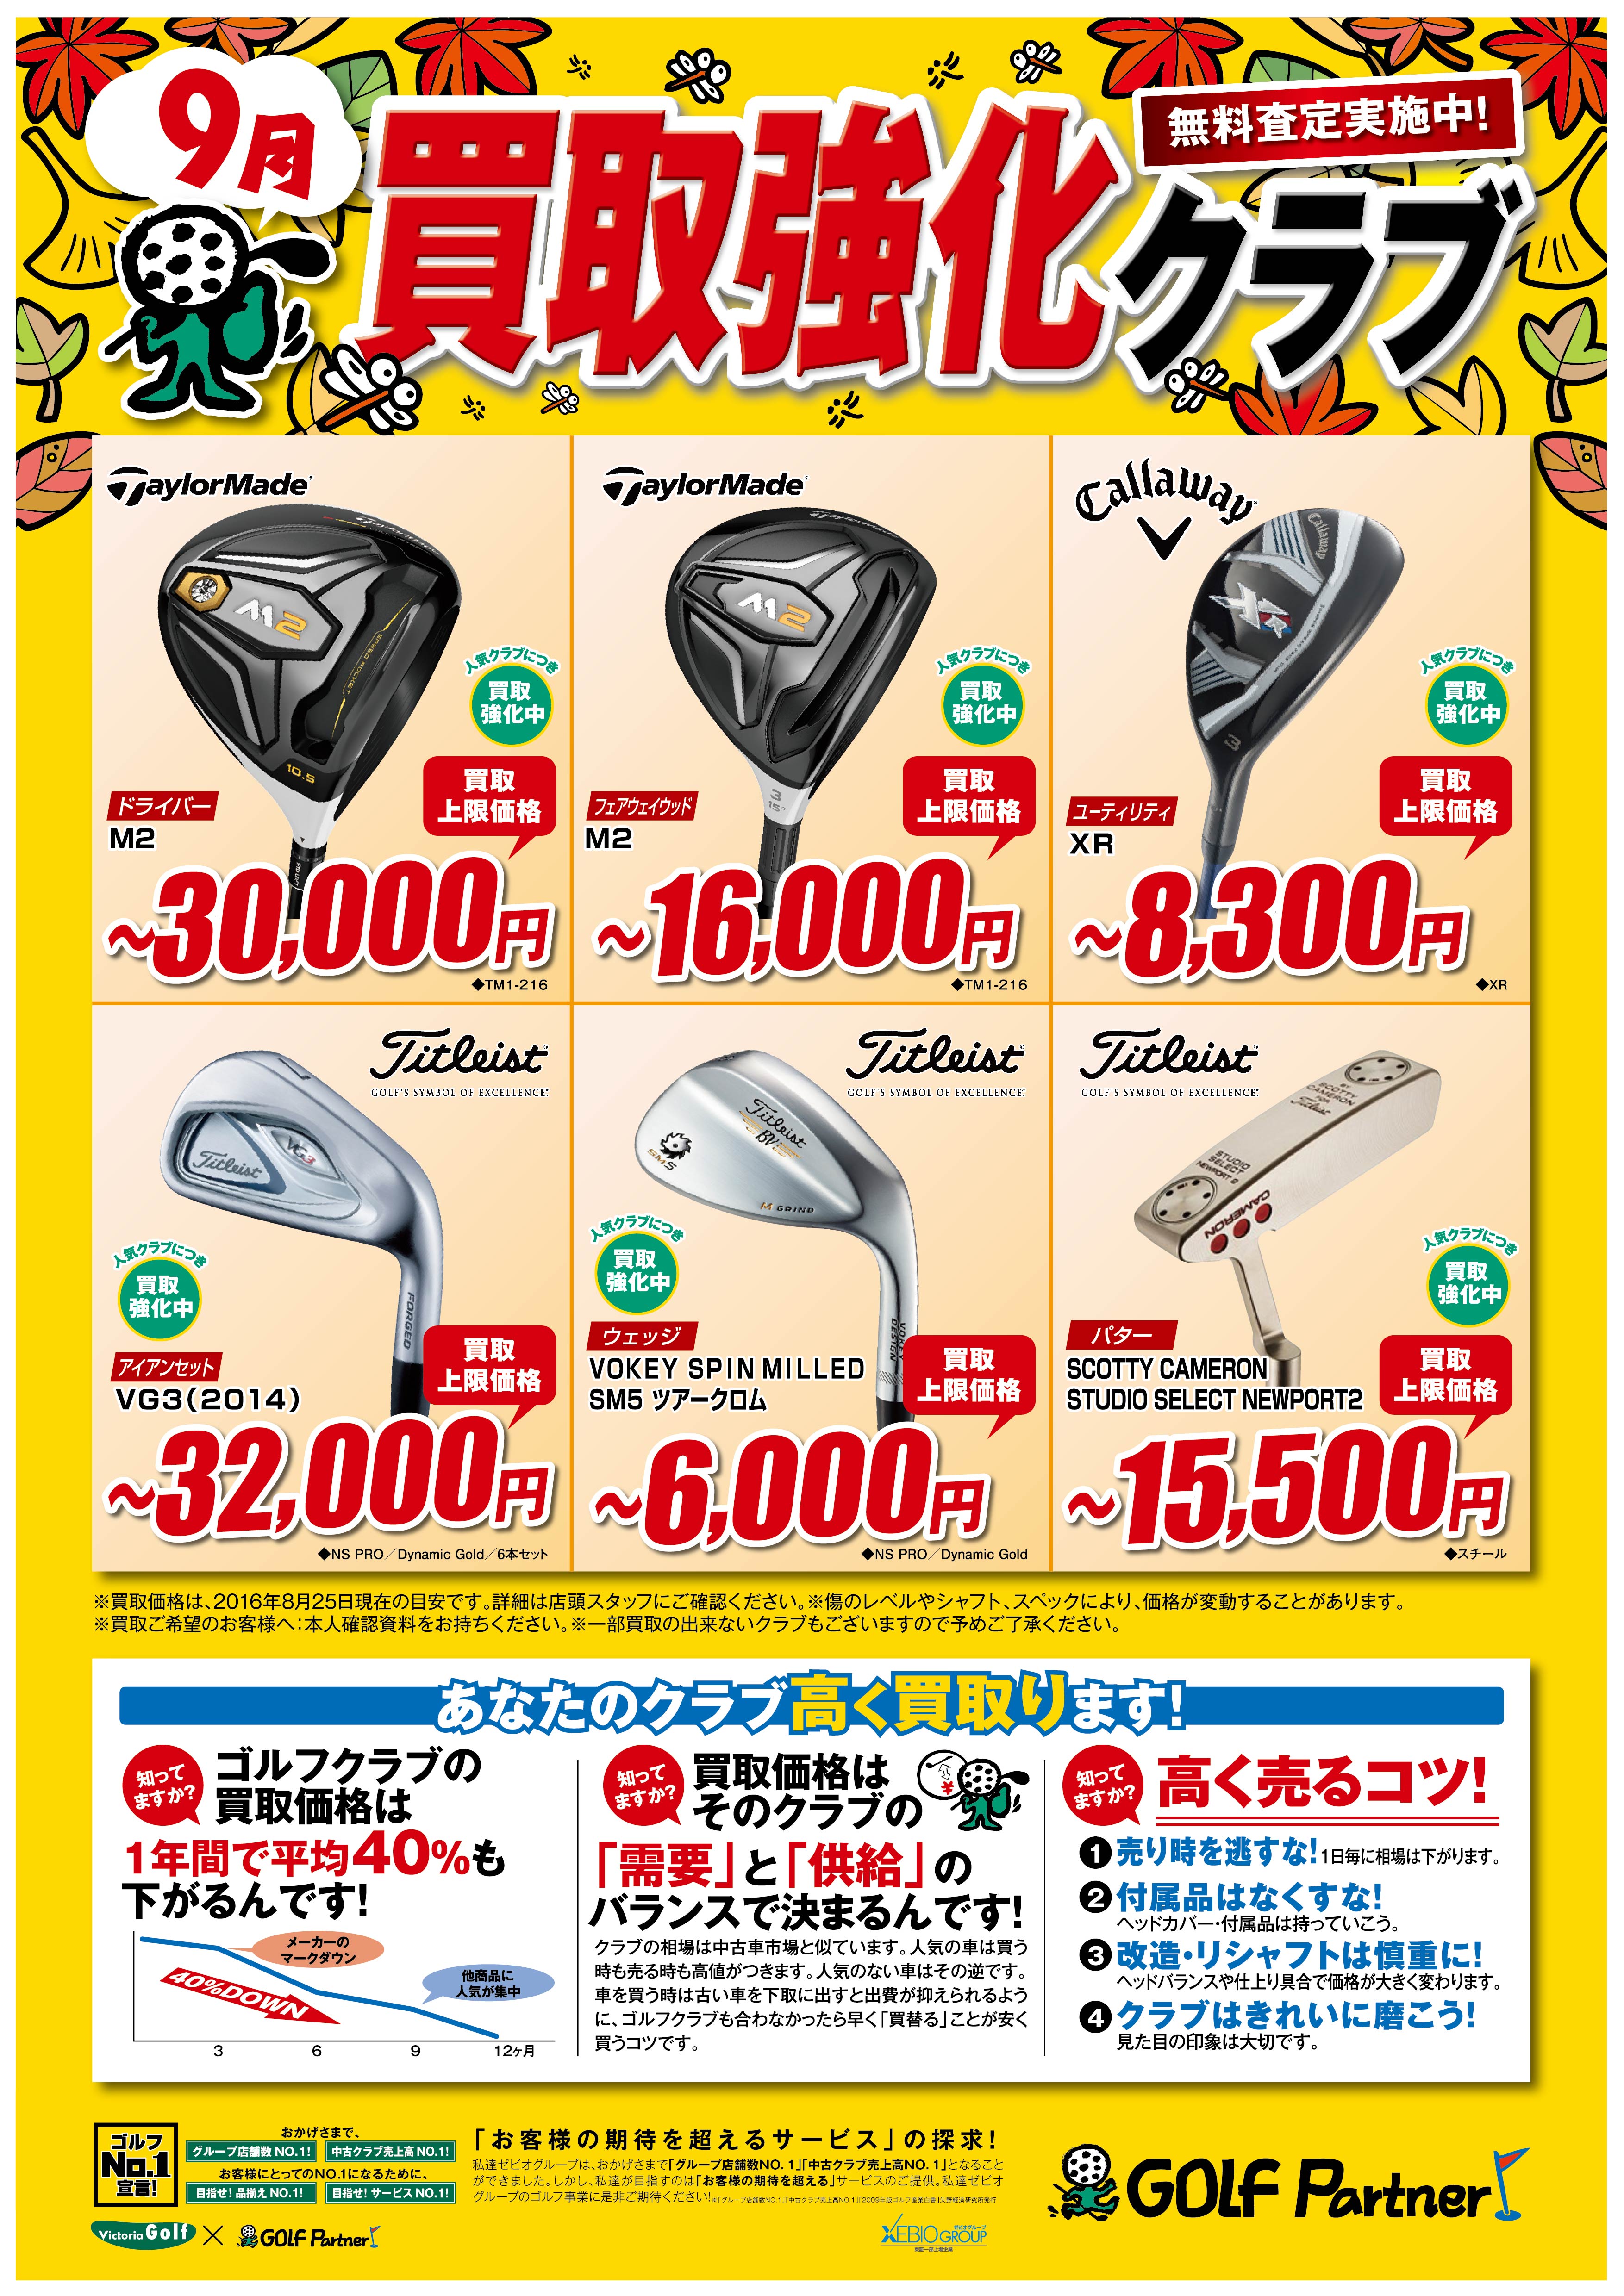 http://www.golfpartner.co.jp/536/1608_9kaitori_A3_GP.jpg